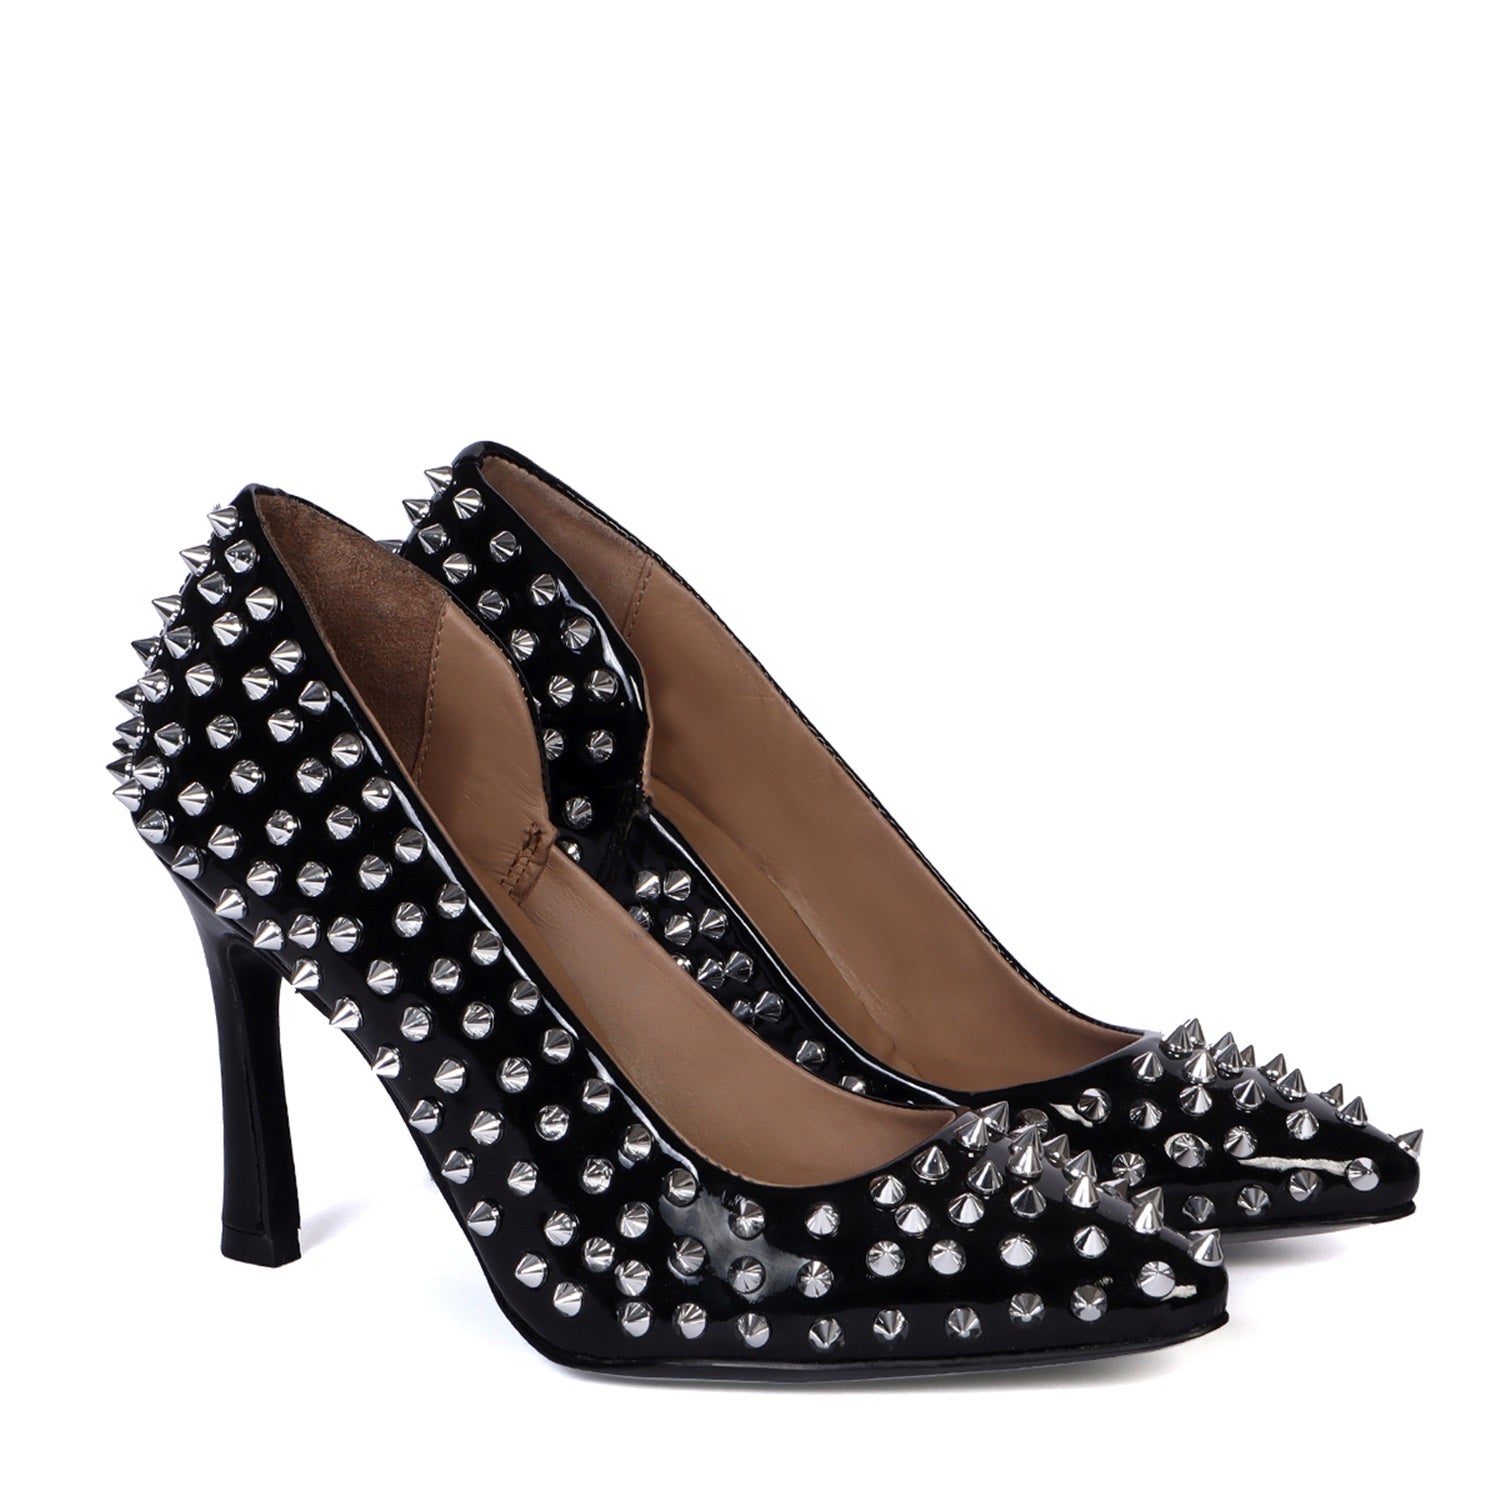 Classy Black Handmade Patent Leather Pointed Toe High Heel With Silver Studs Ladies Footwear By Brune & Bareskin